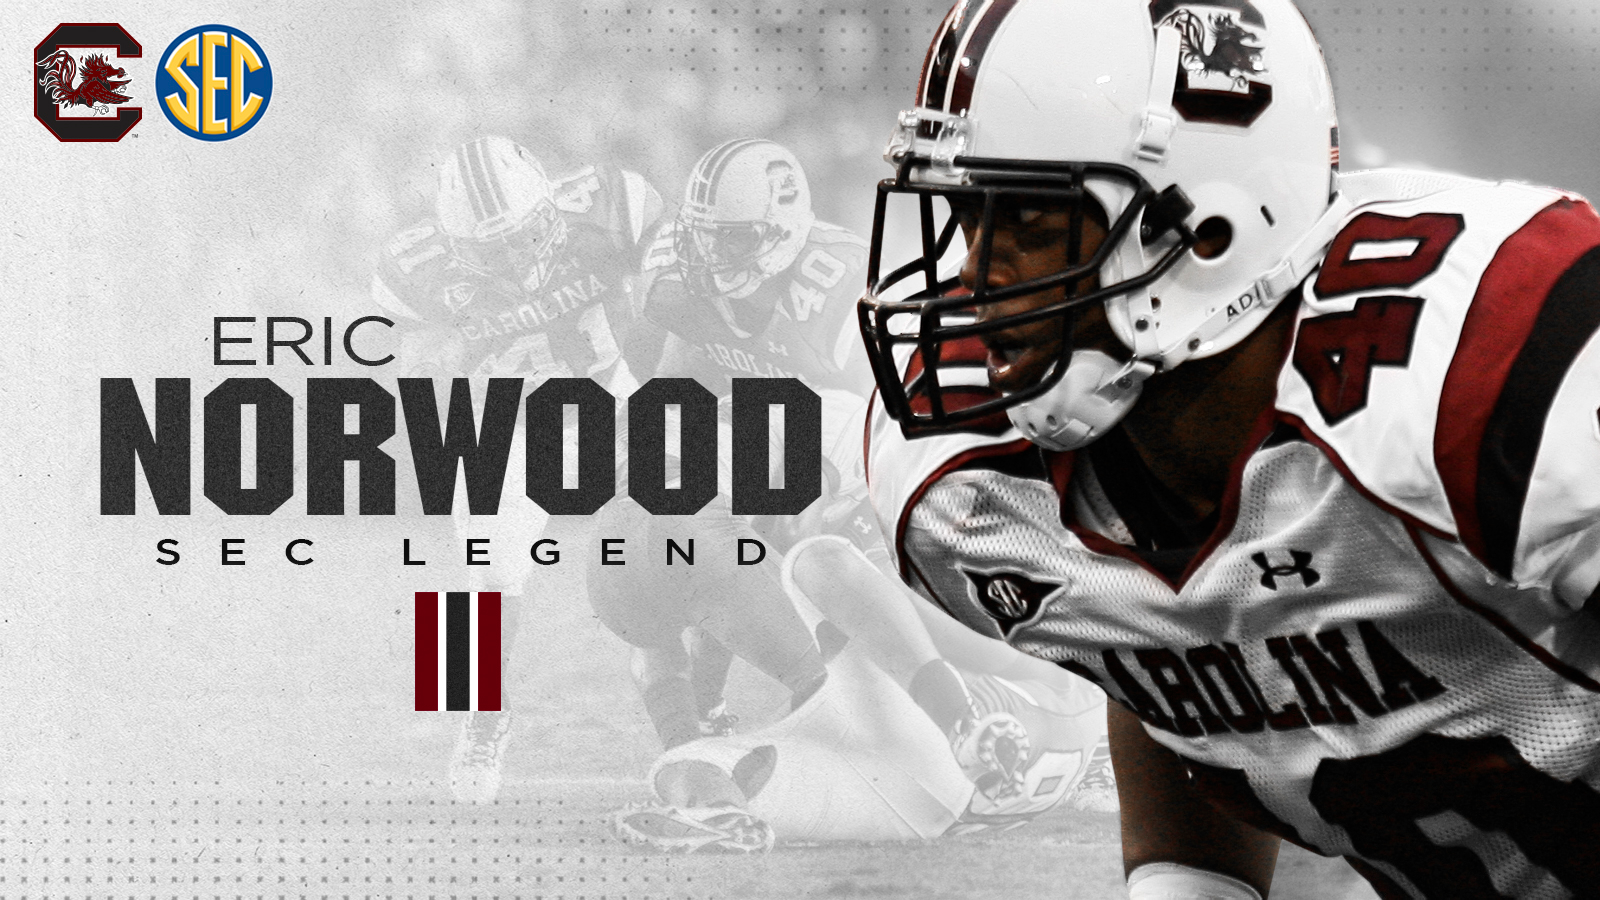 Eric Norwood Named 2018 SEC Legend